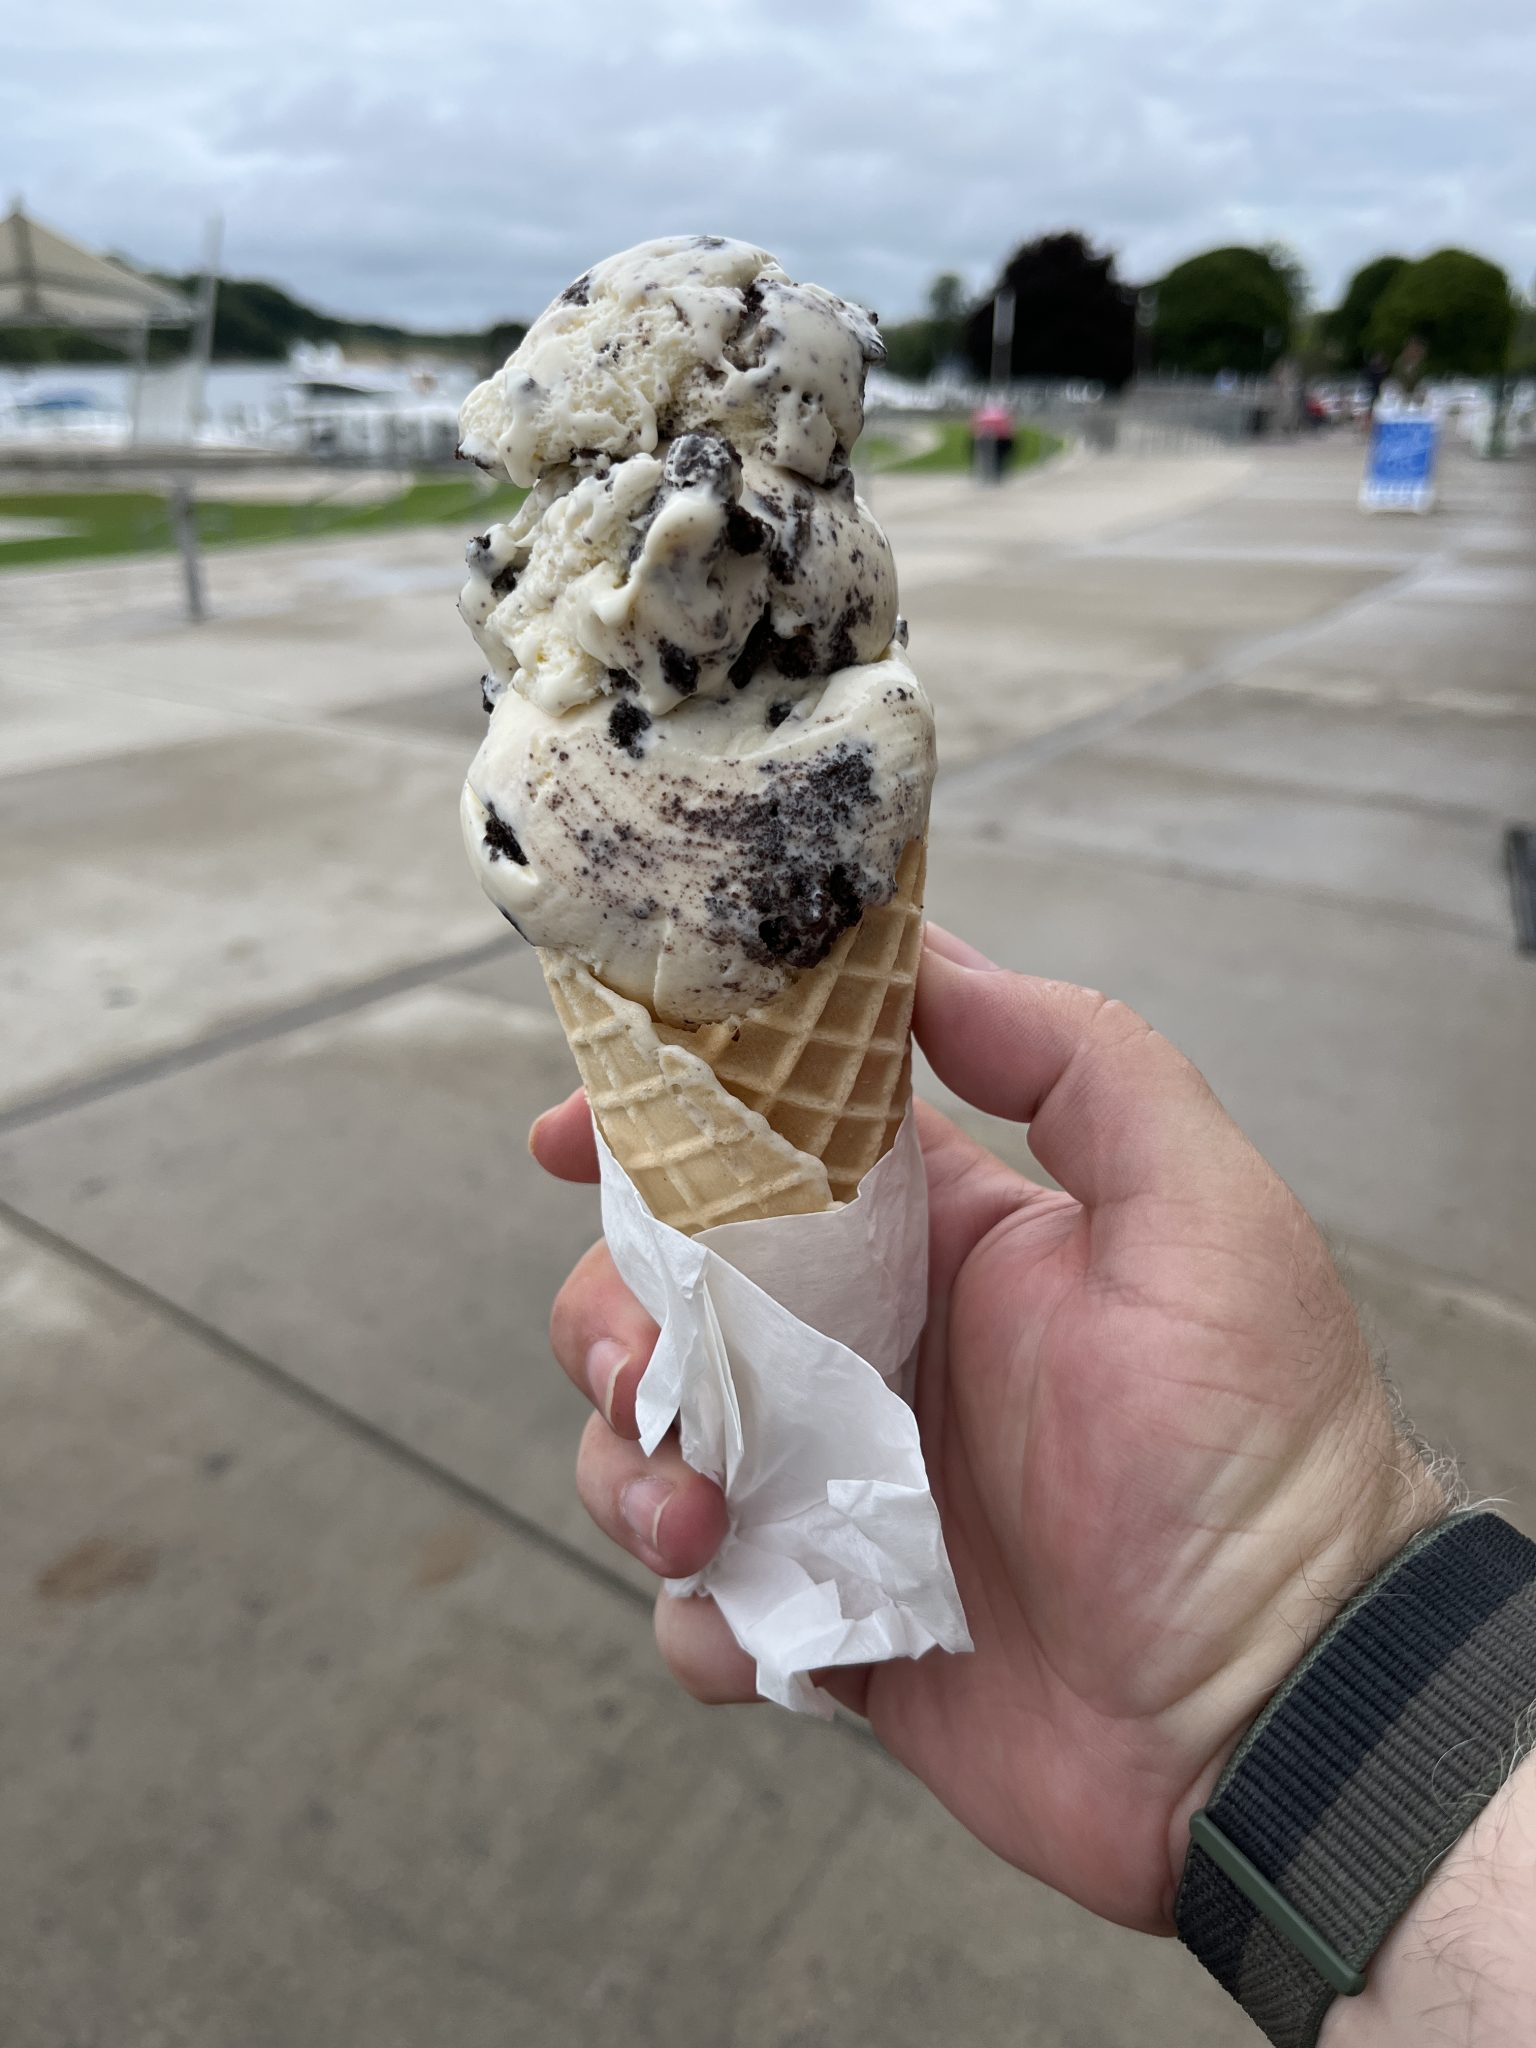 Cookies and cream ice cream cone in Grand Haven, Michigan